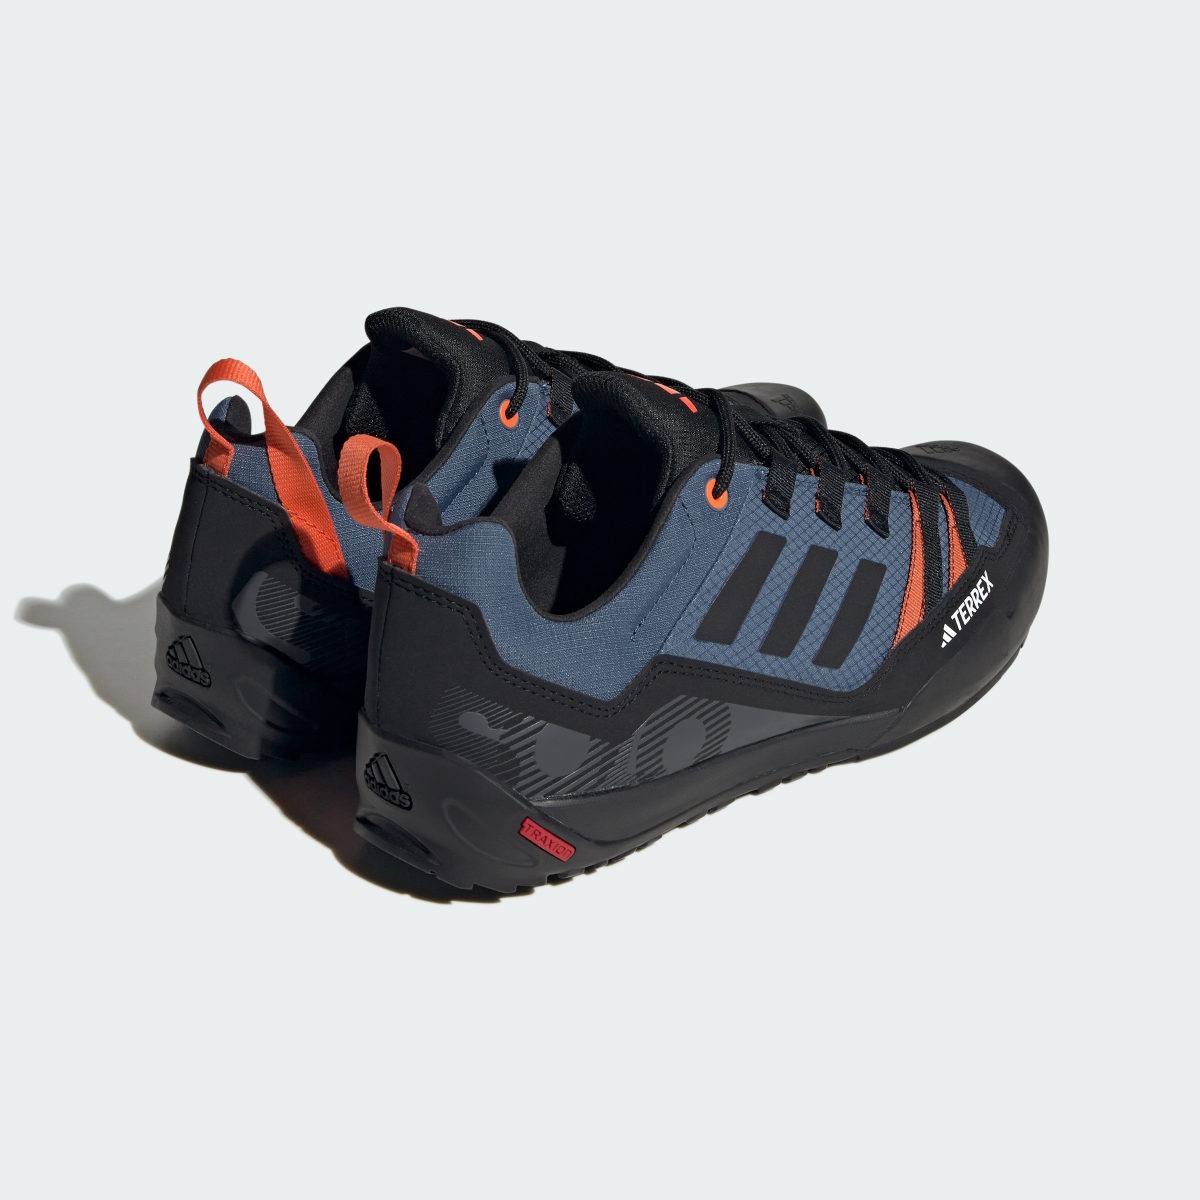 Adidas Terrex Swift Solo 2.0 Hiking Shoes. 6